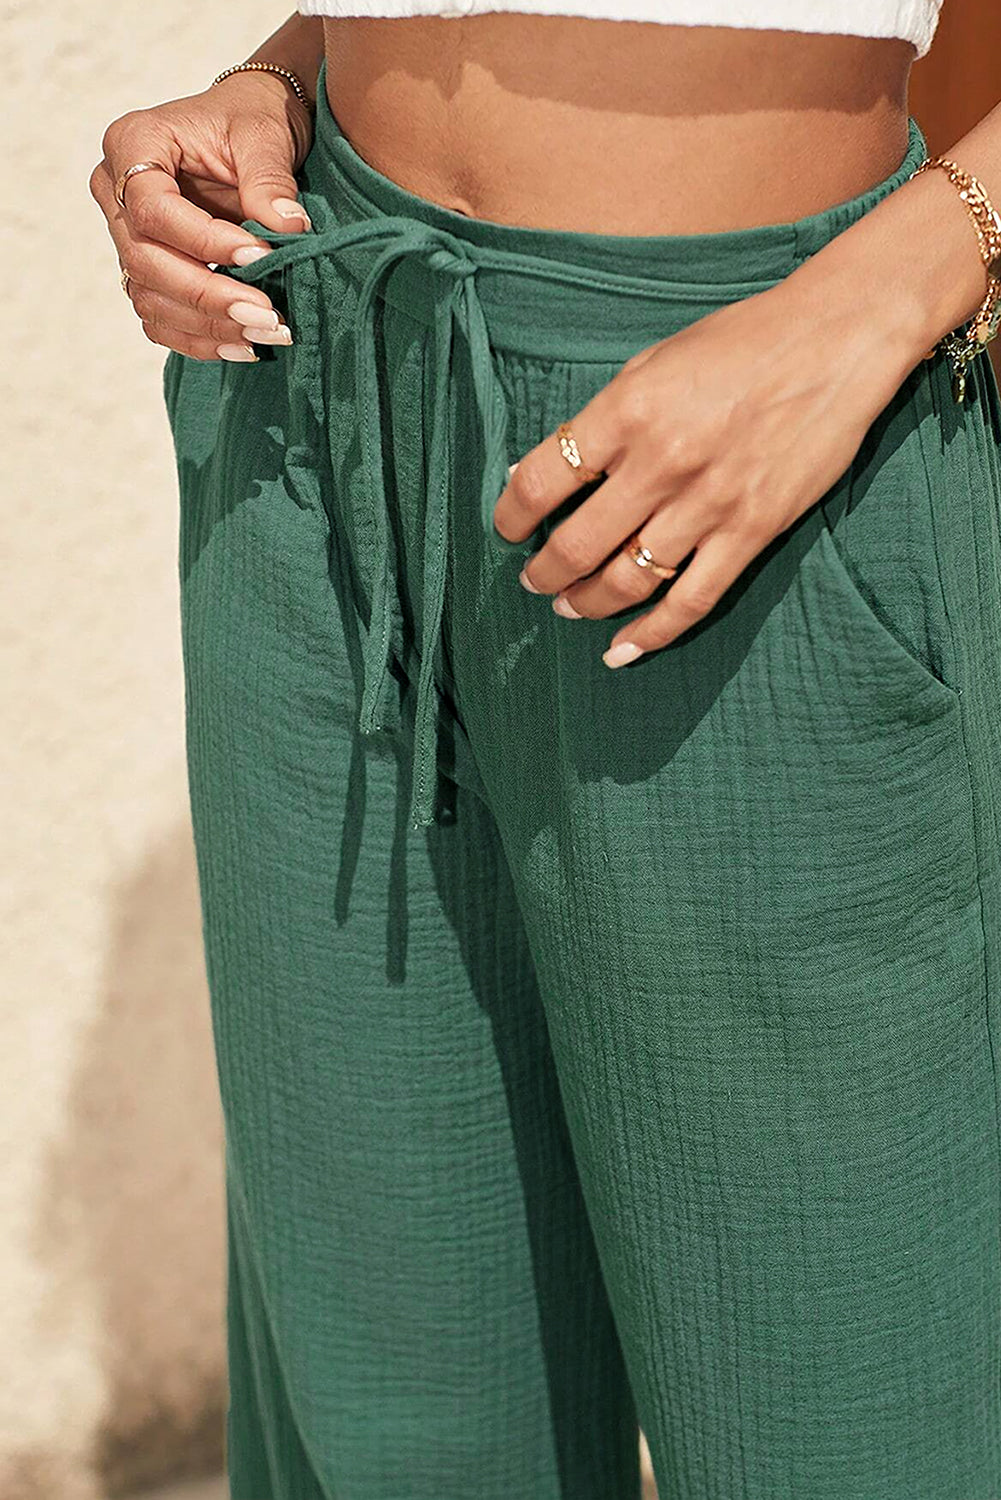 Mint Green Drawstring Wide Leg 100% Cotton Womens Pants